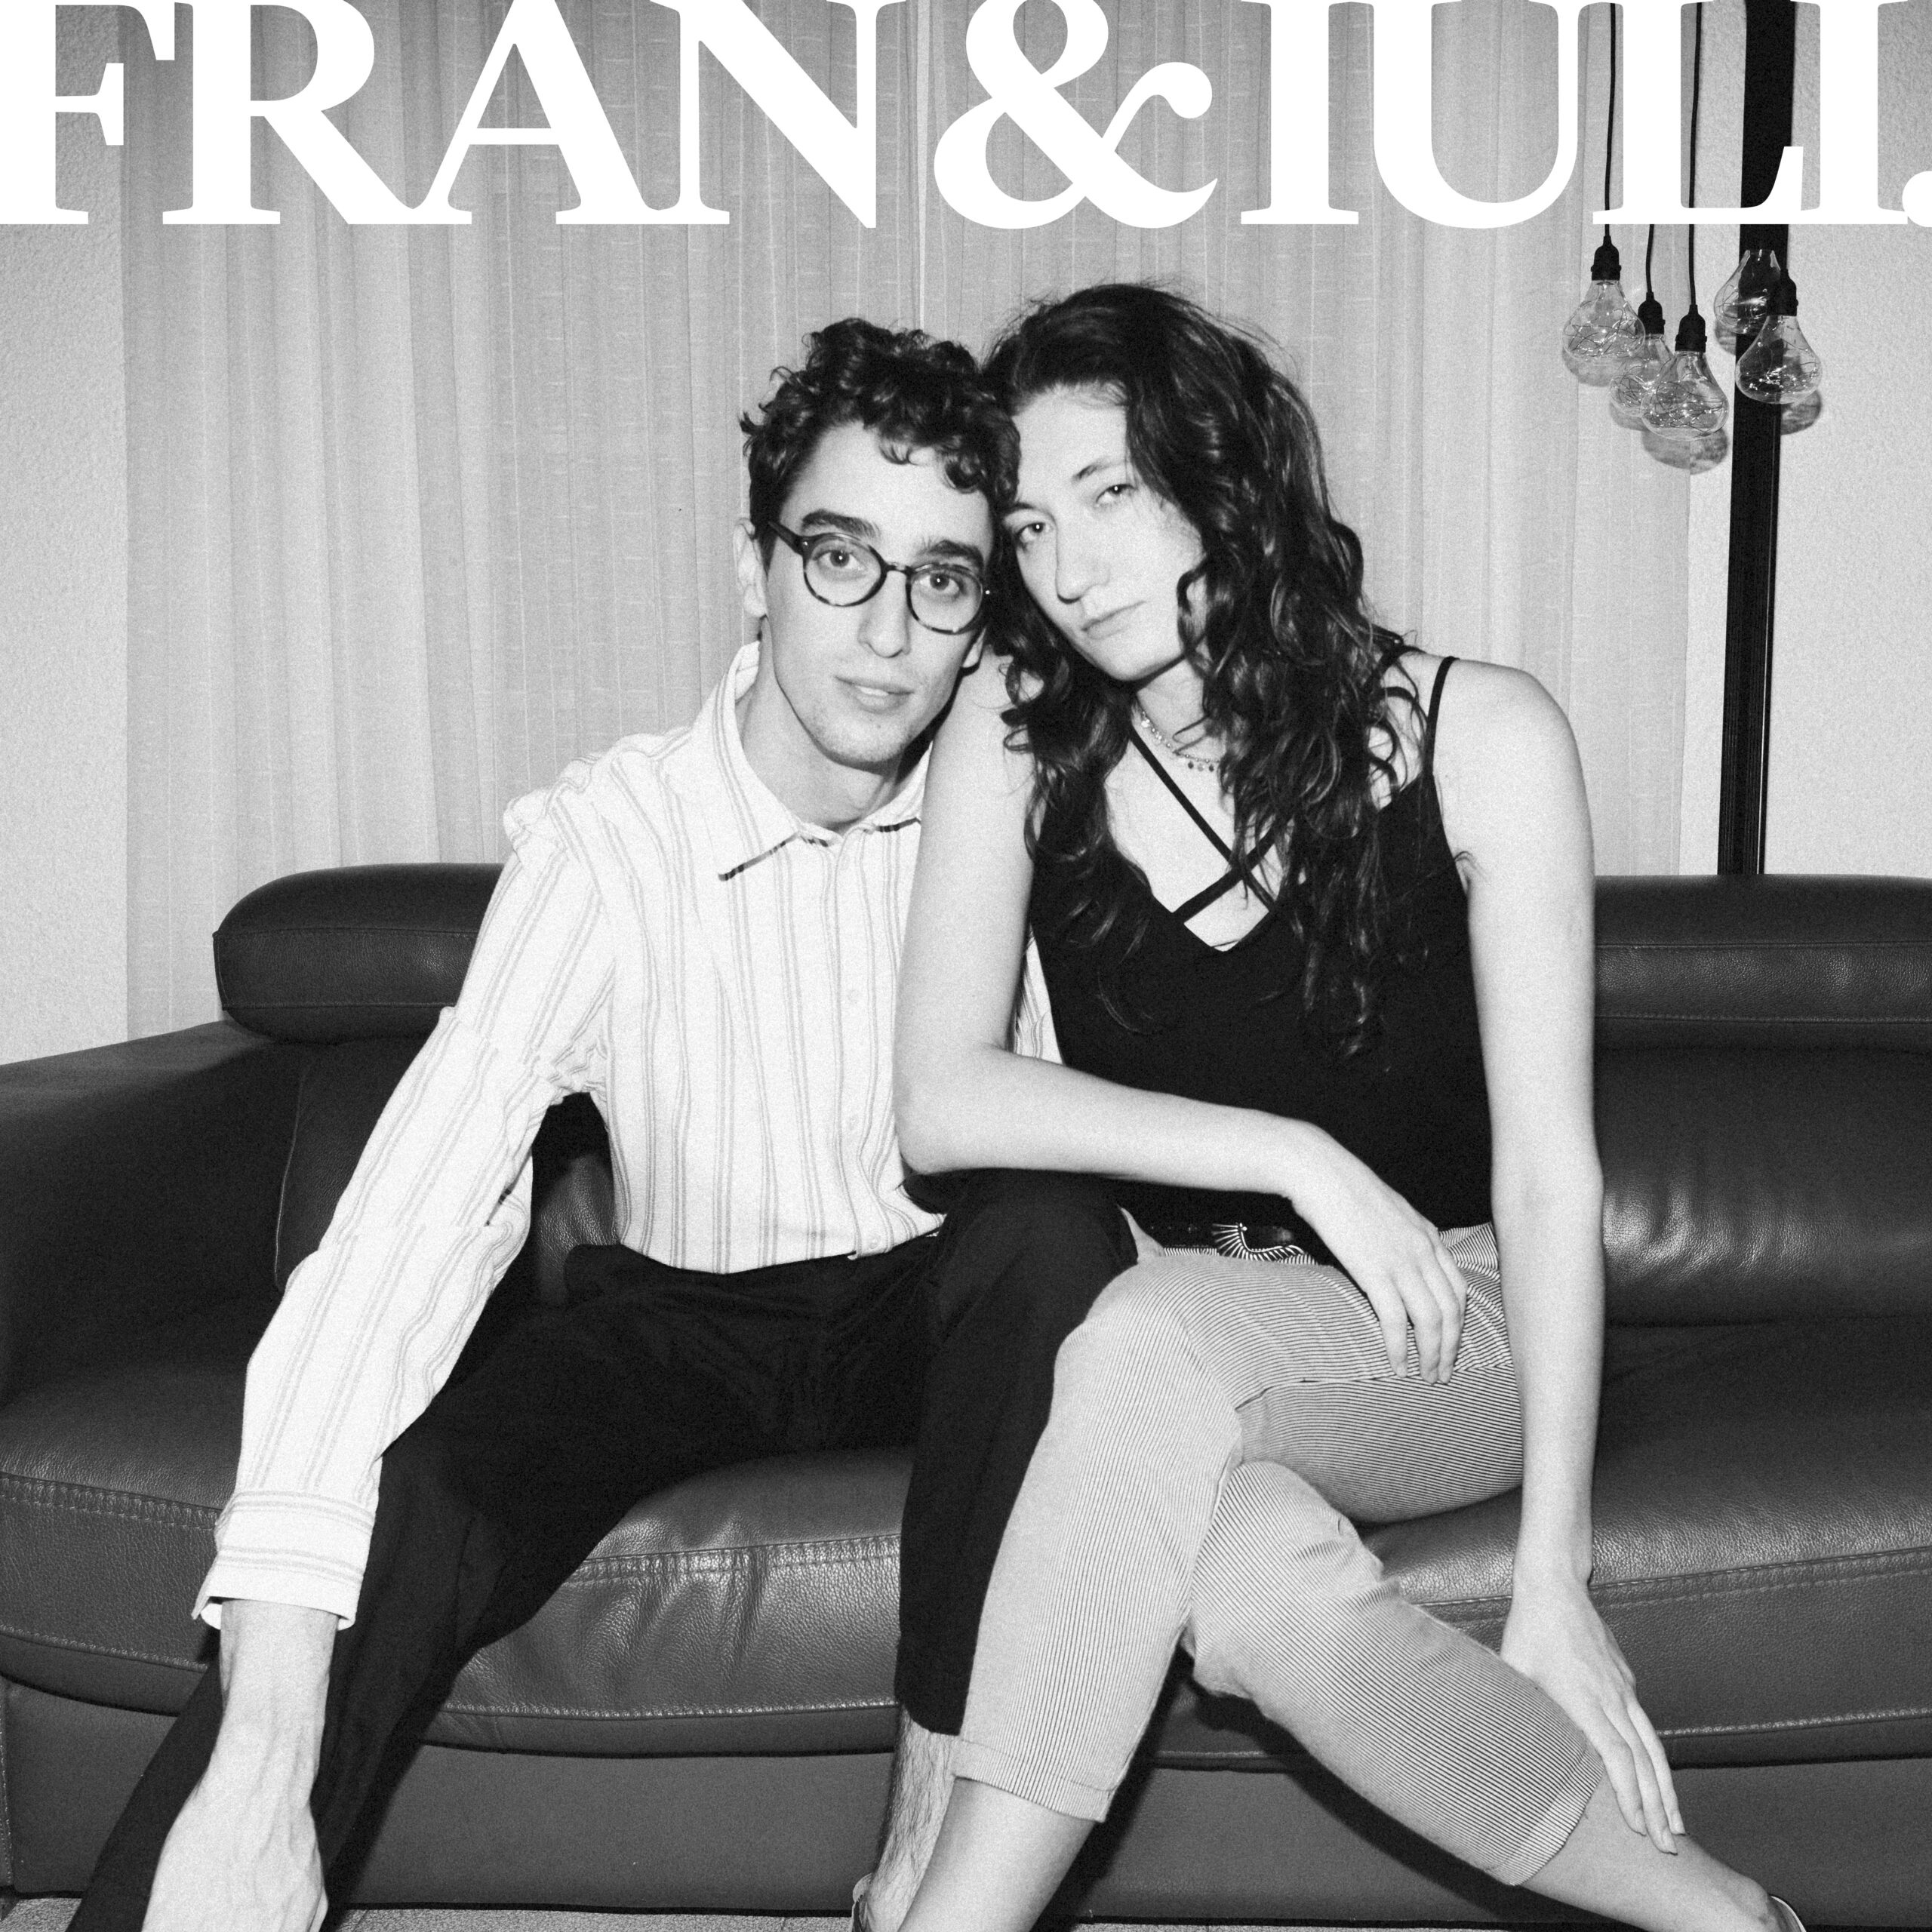 Instagram de Francisco & Iuliana